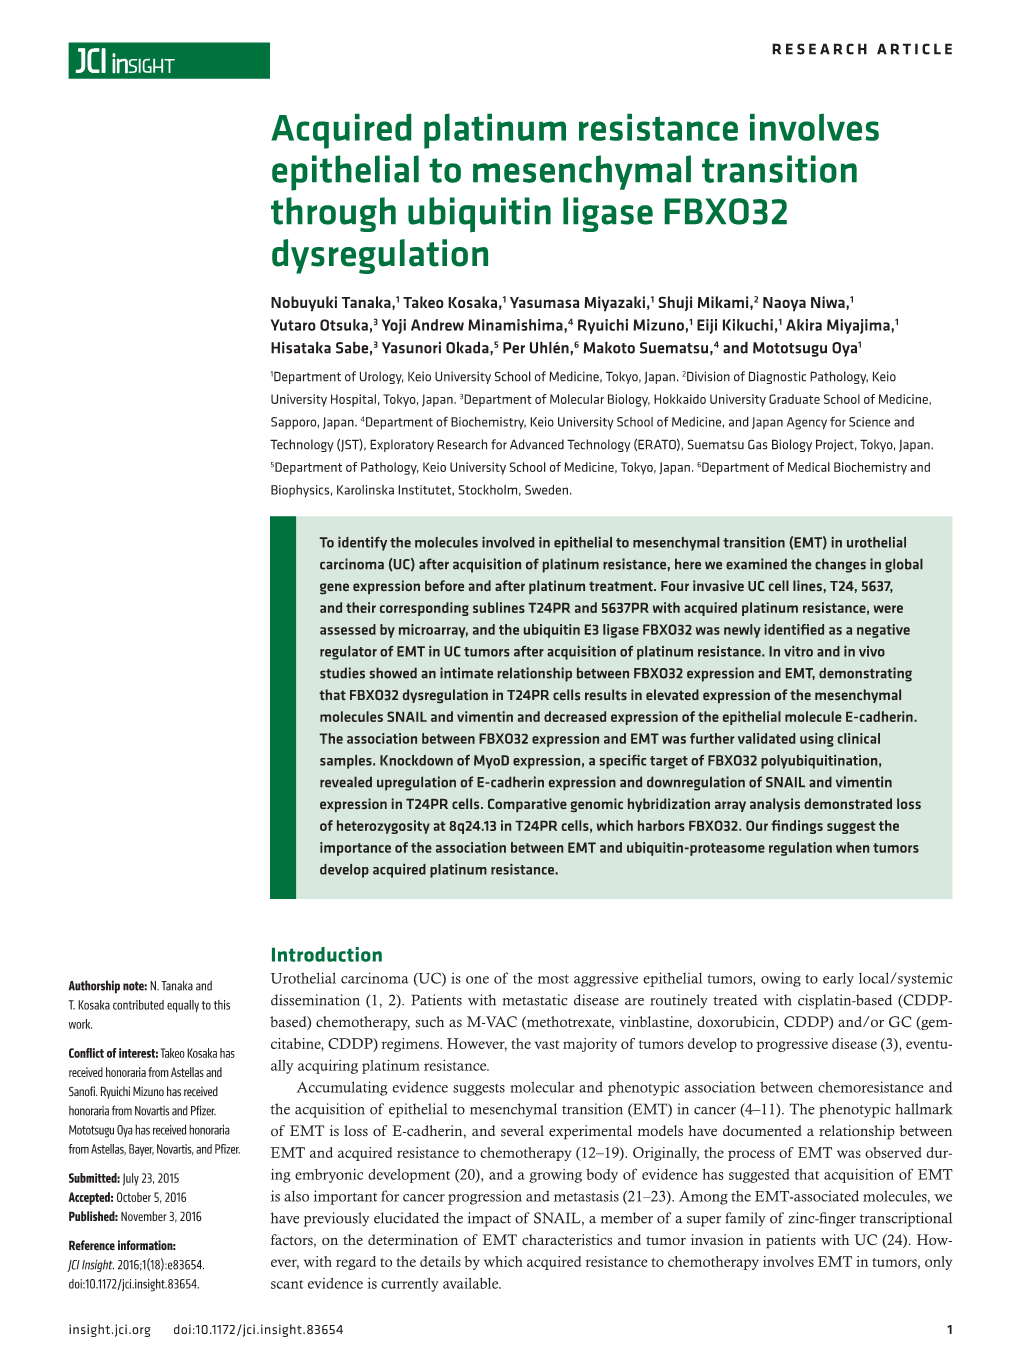 Acquired Platinum Resistance Involves Epithelial to Mesenchymal Transition Through Ubiquitin Ligase FBXO32 Dysregulation